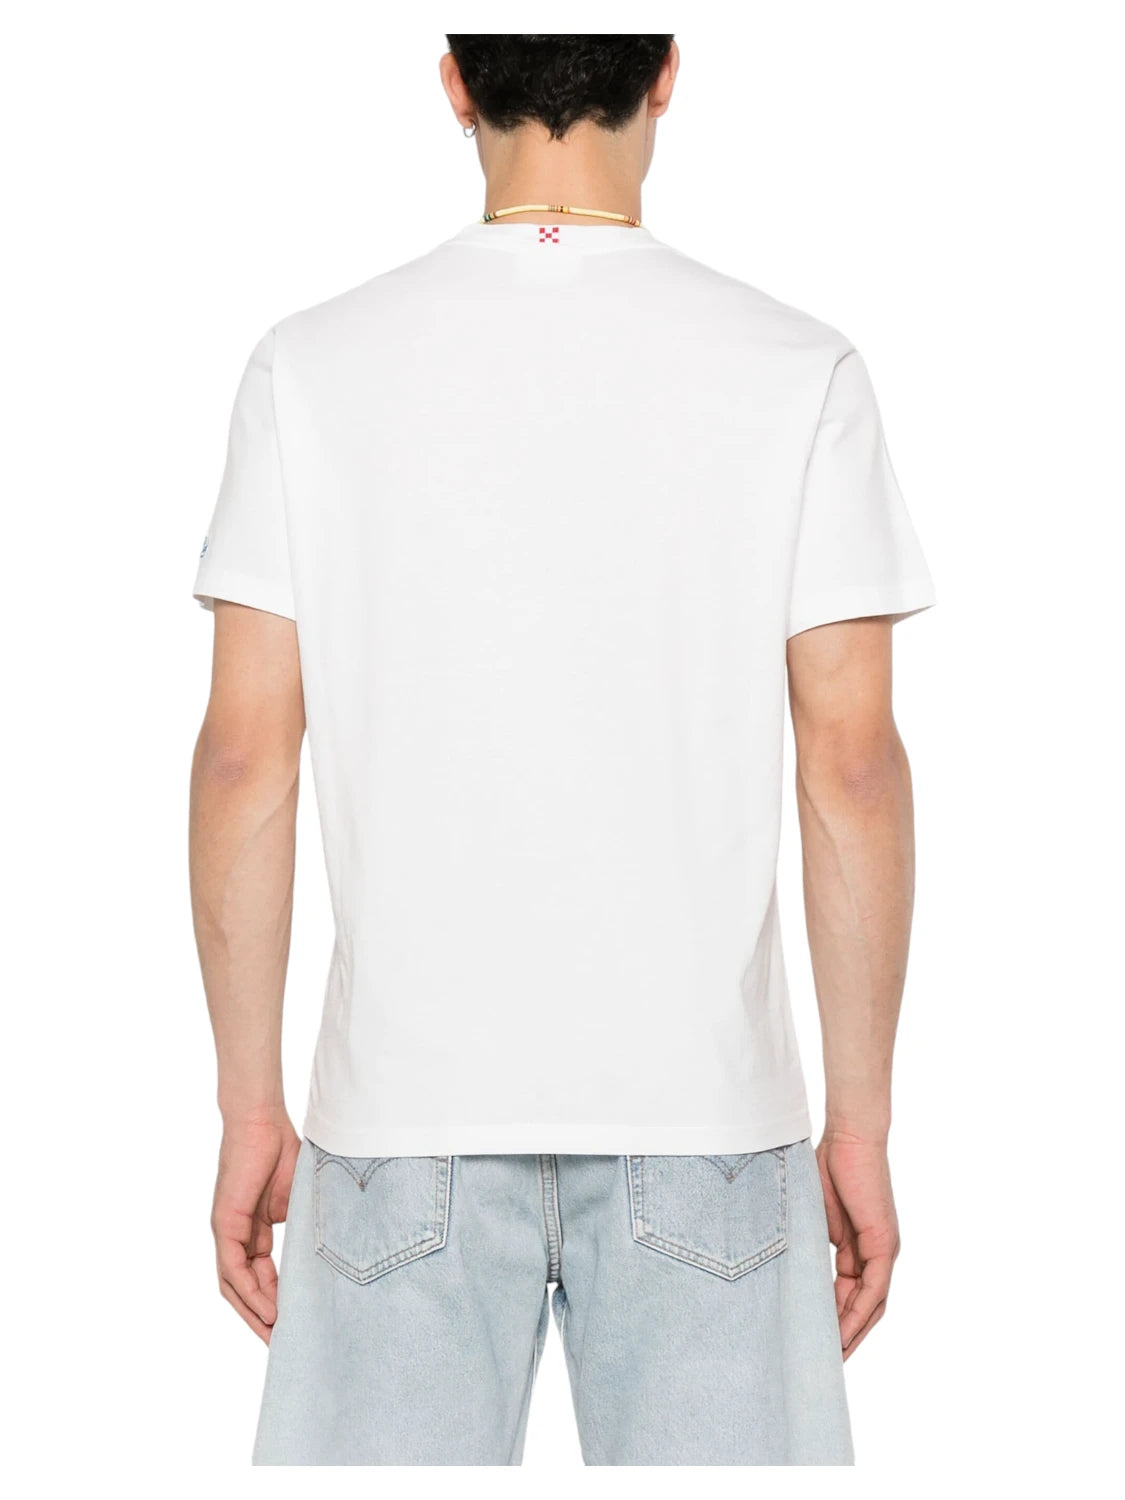 T-Shirt Gin mare dentro-Mc2 Saint Barth-T-shirt-Vittorio Citro Boutique